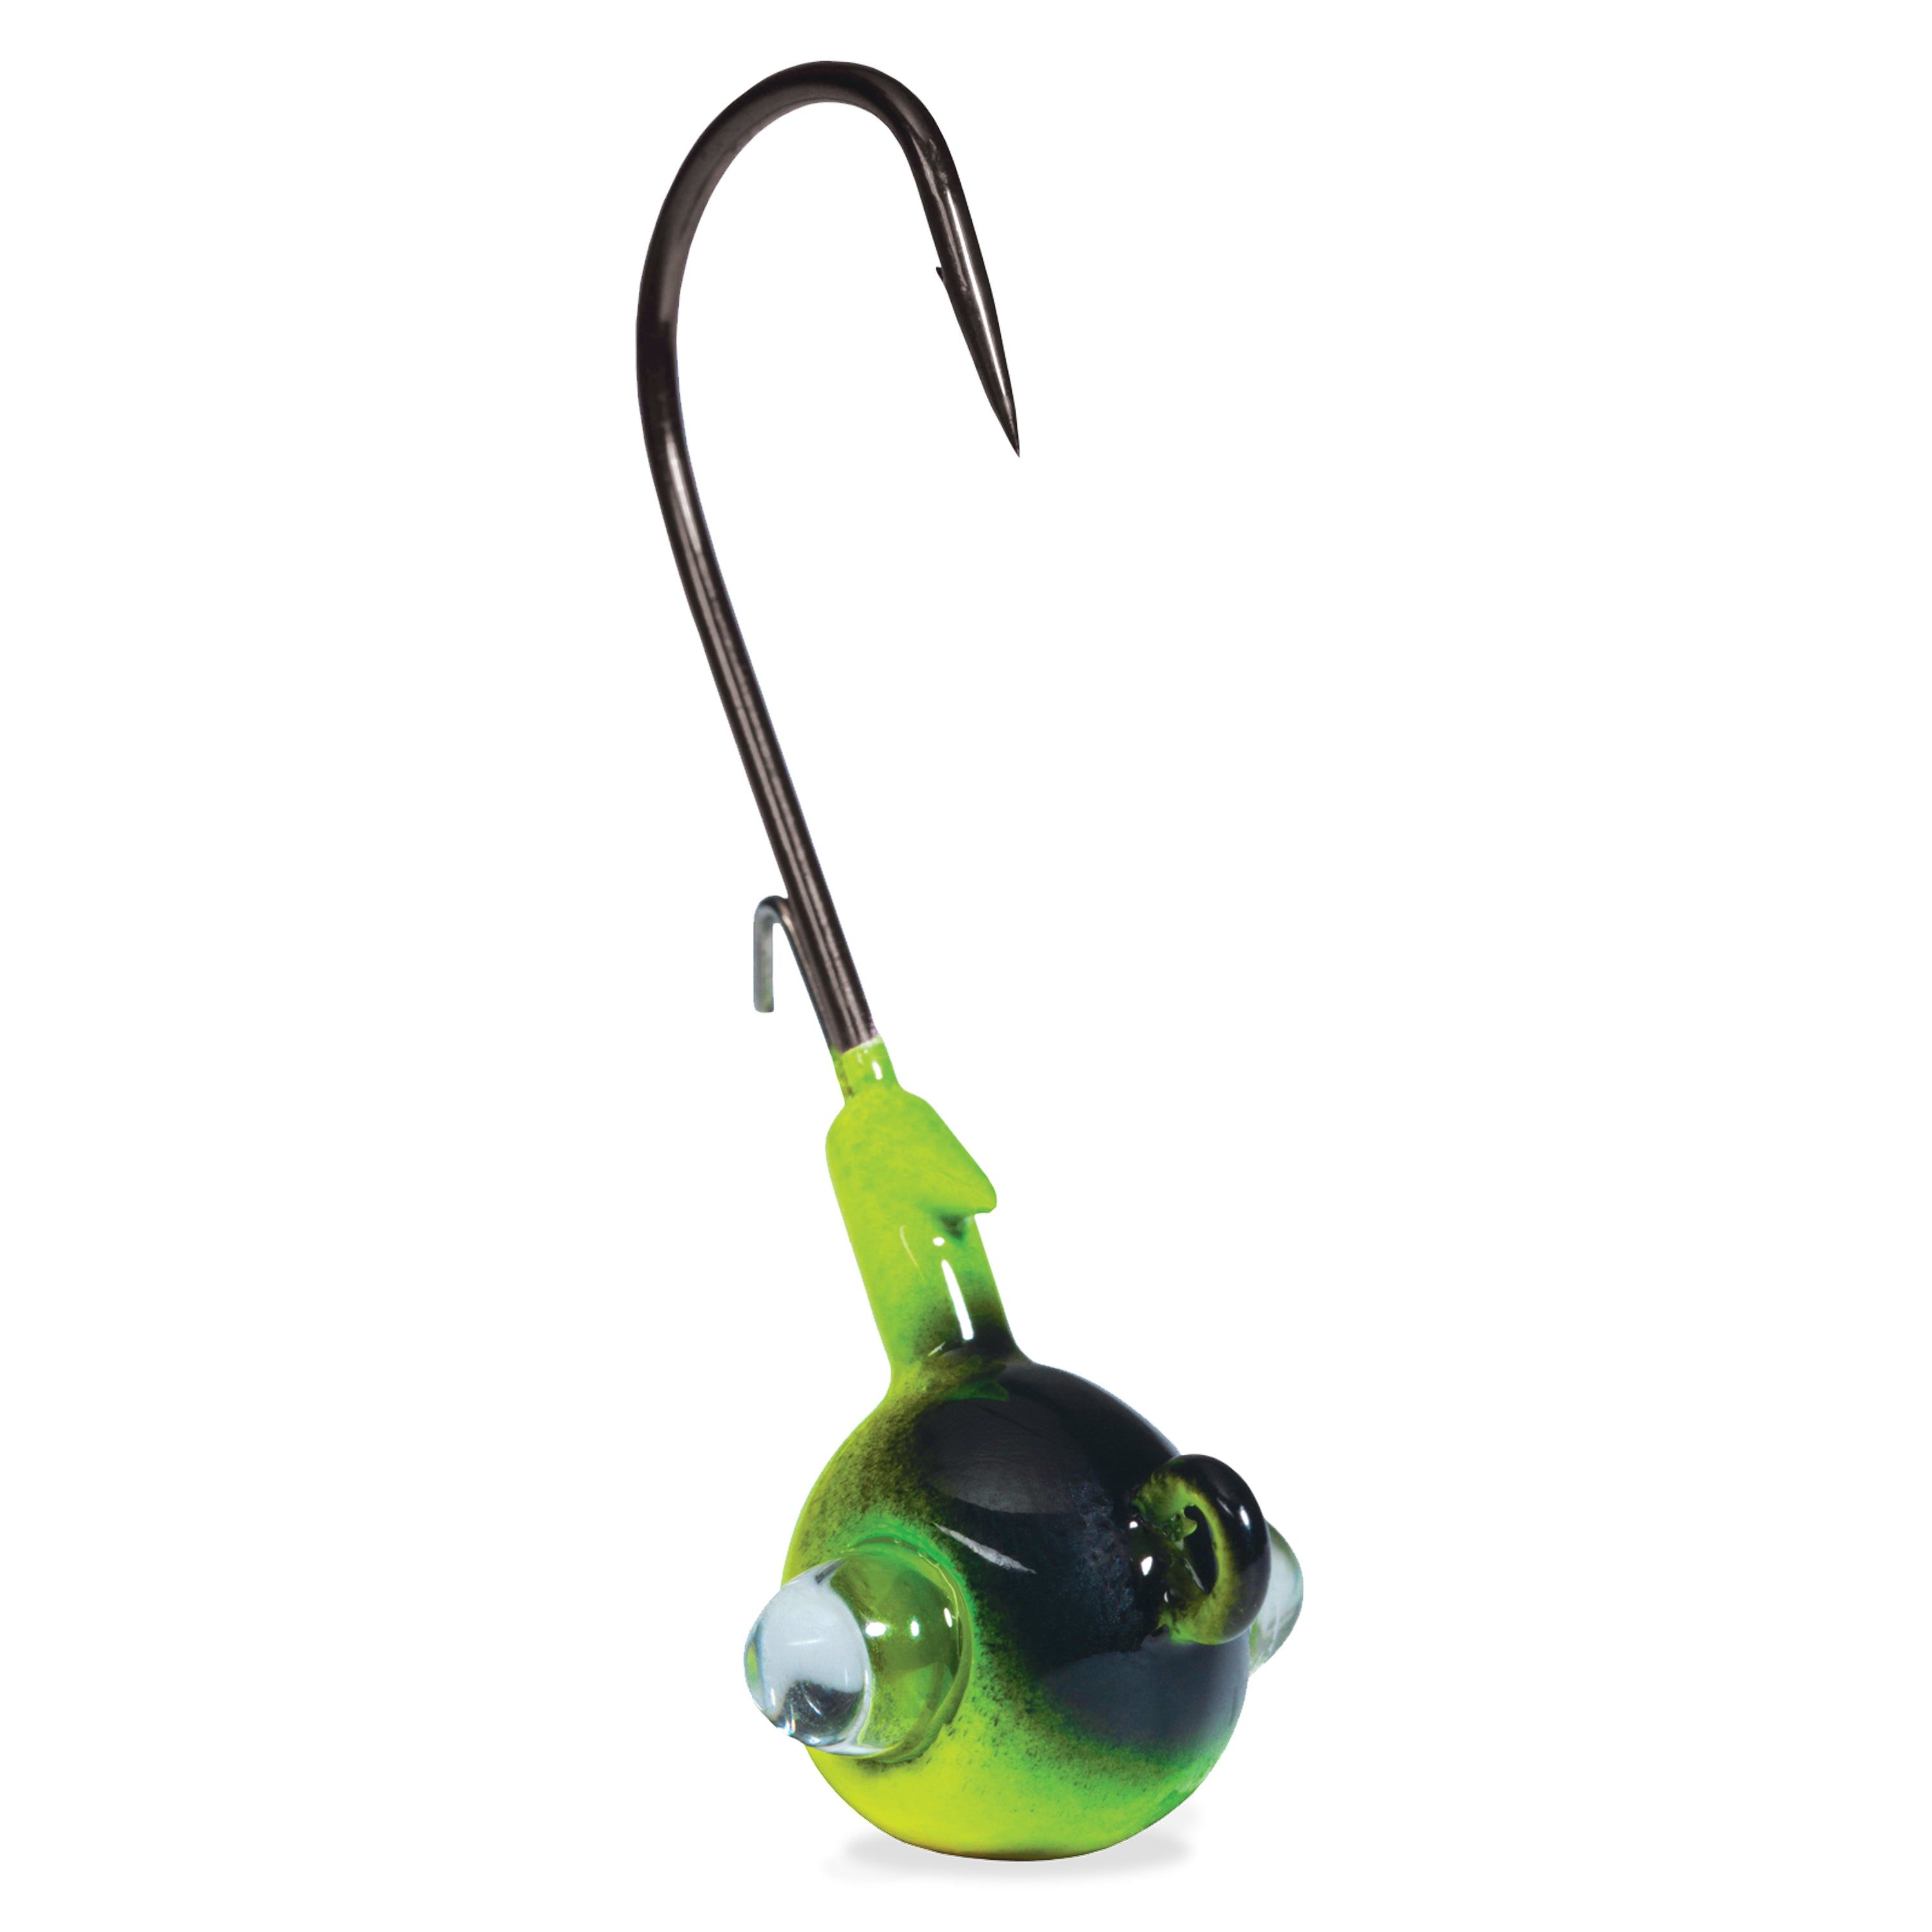 Glowing Eyes Saltwater Jig Fishing Lures: High-Strength, Versatile, and  Irresistible - 80g / Green